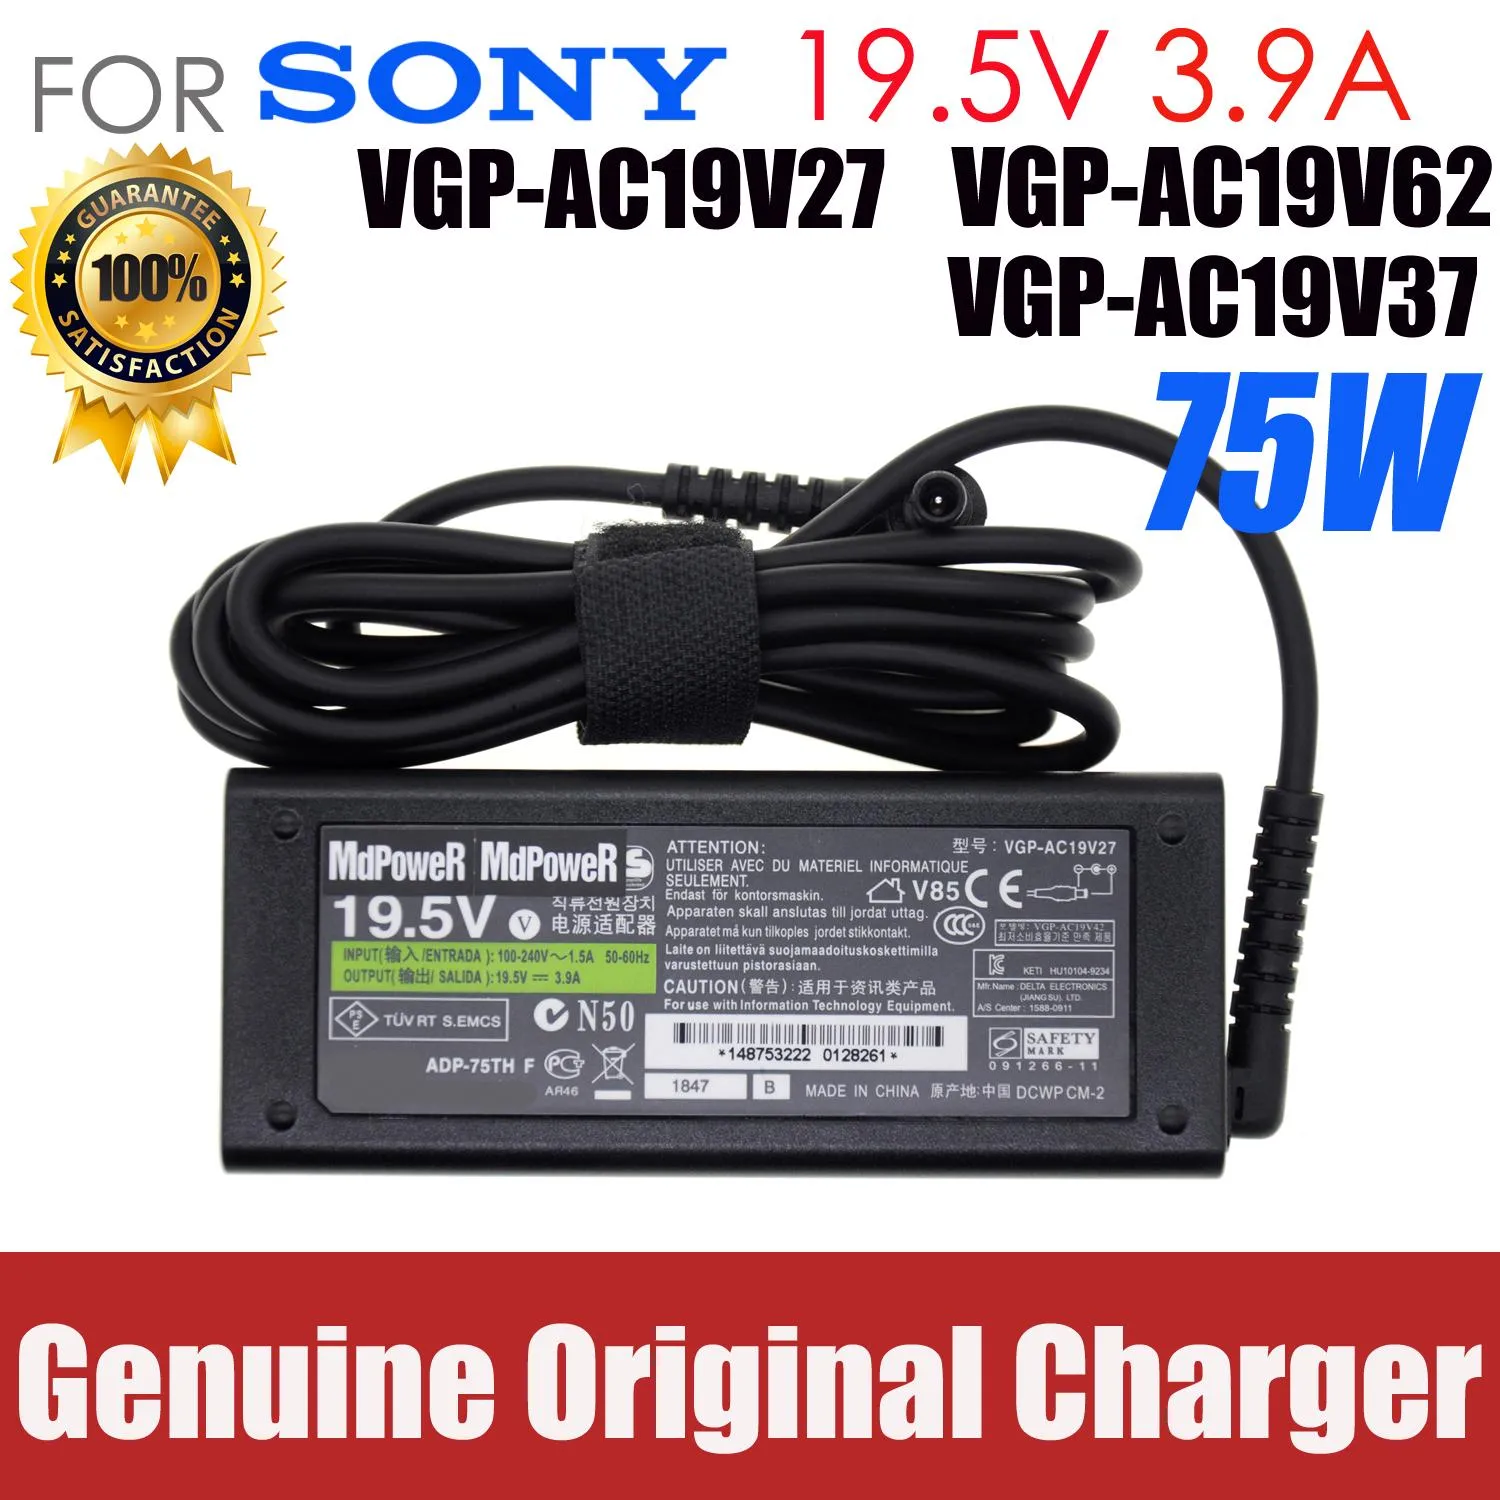 Adapter Original For SONY VAIO 19.5V 3.9A 75W VGPAC19V27/ V62 / V37/ V33 / V20 / V19 laptop supply power AC adapter charger